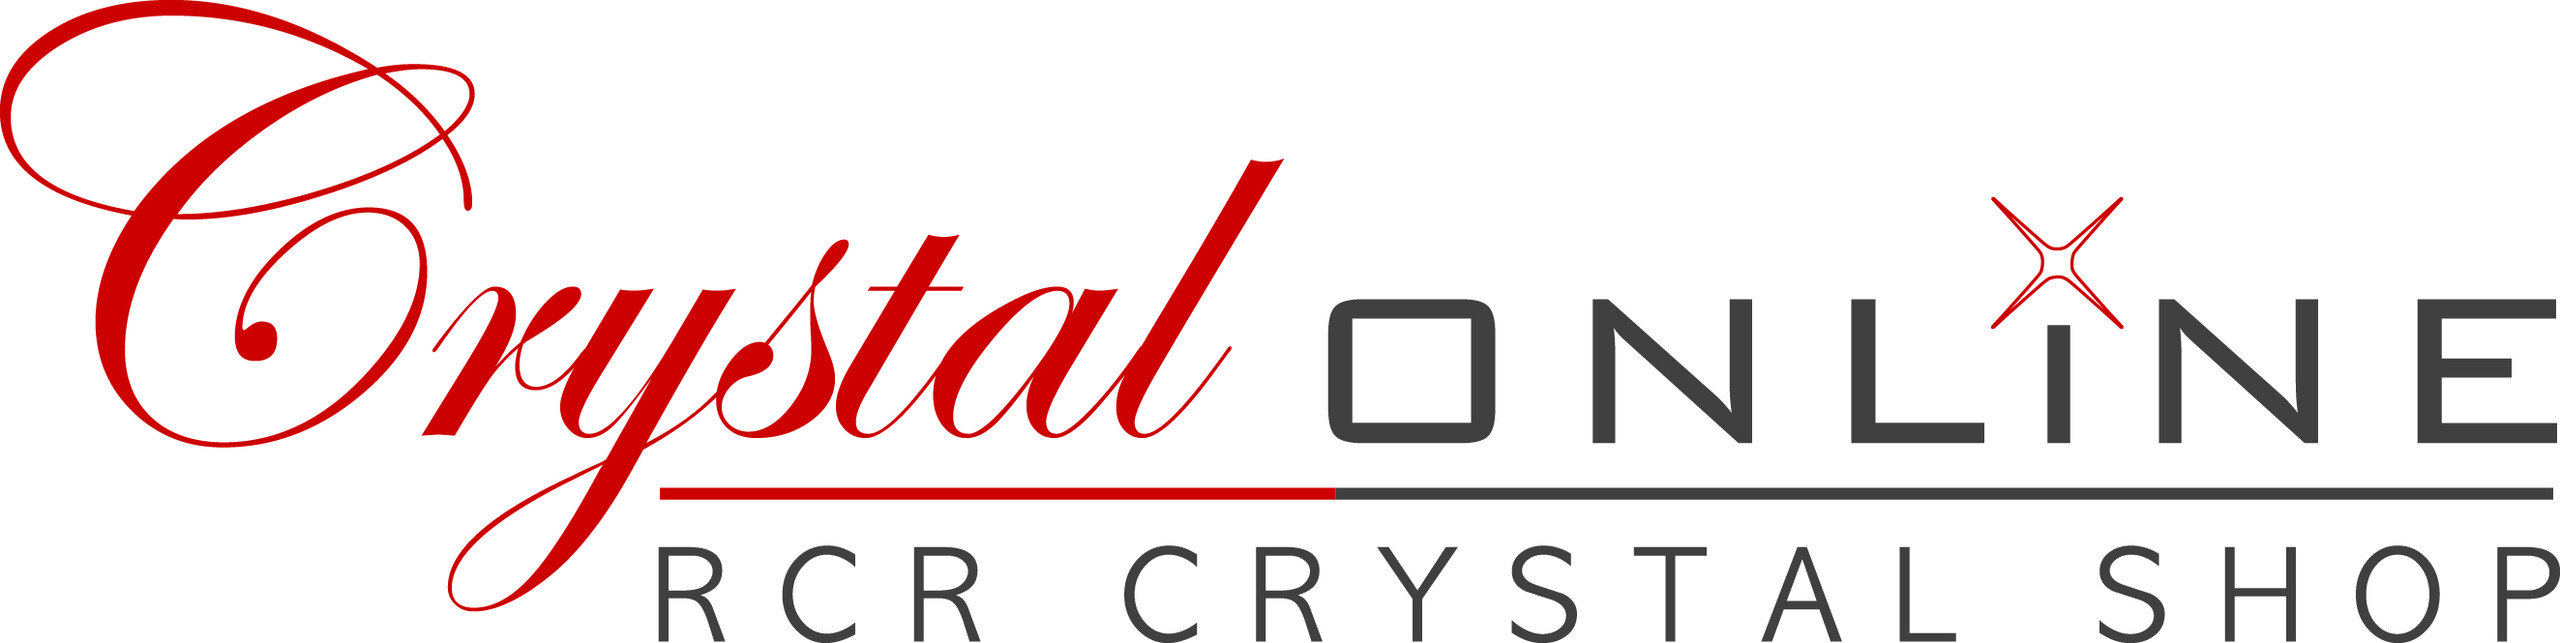 Crystal Online 